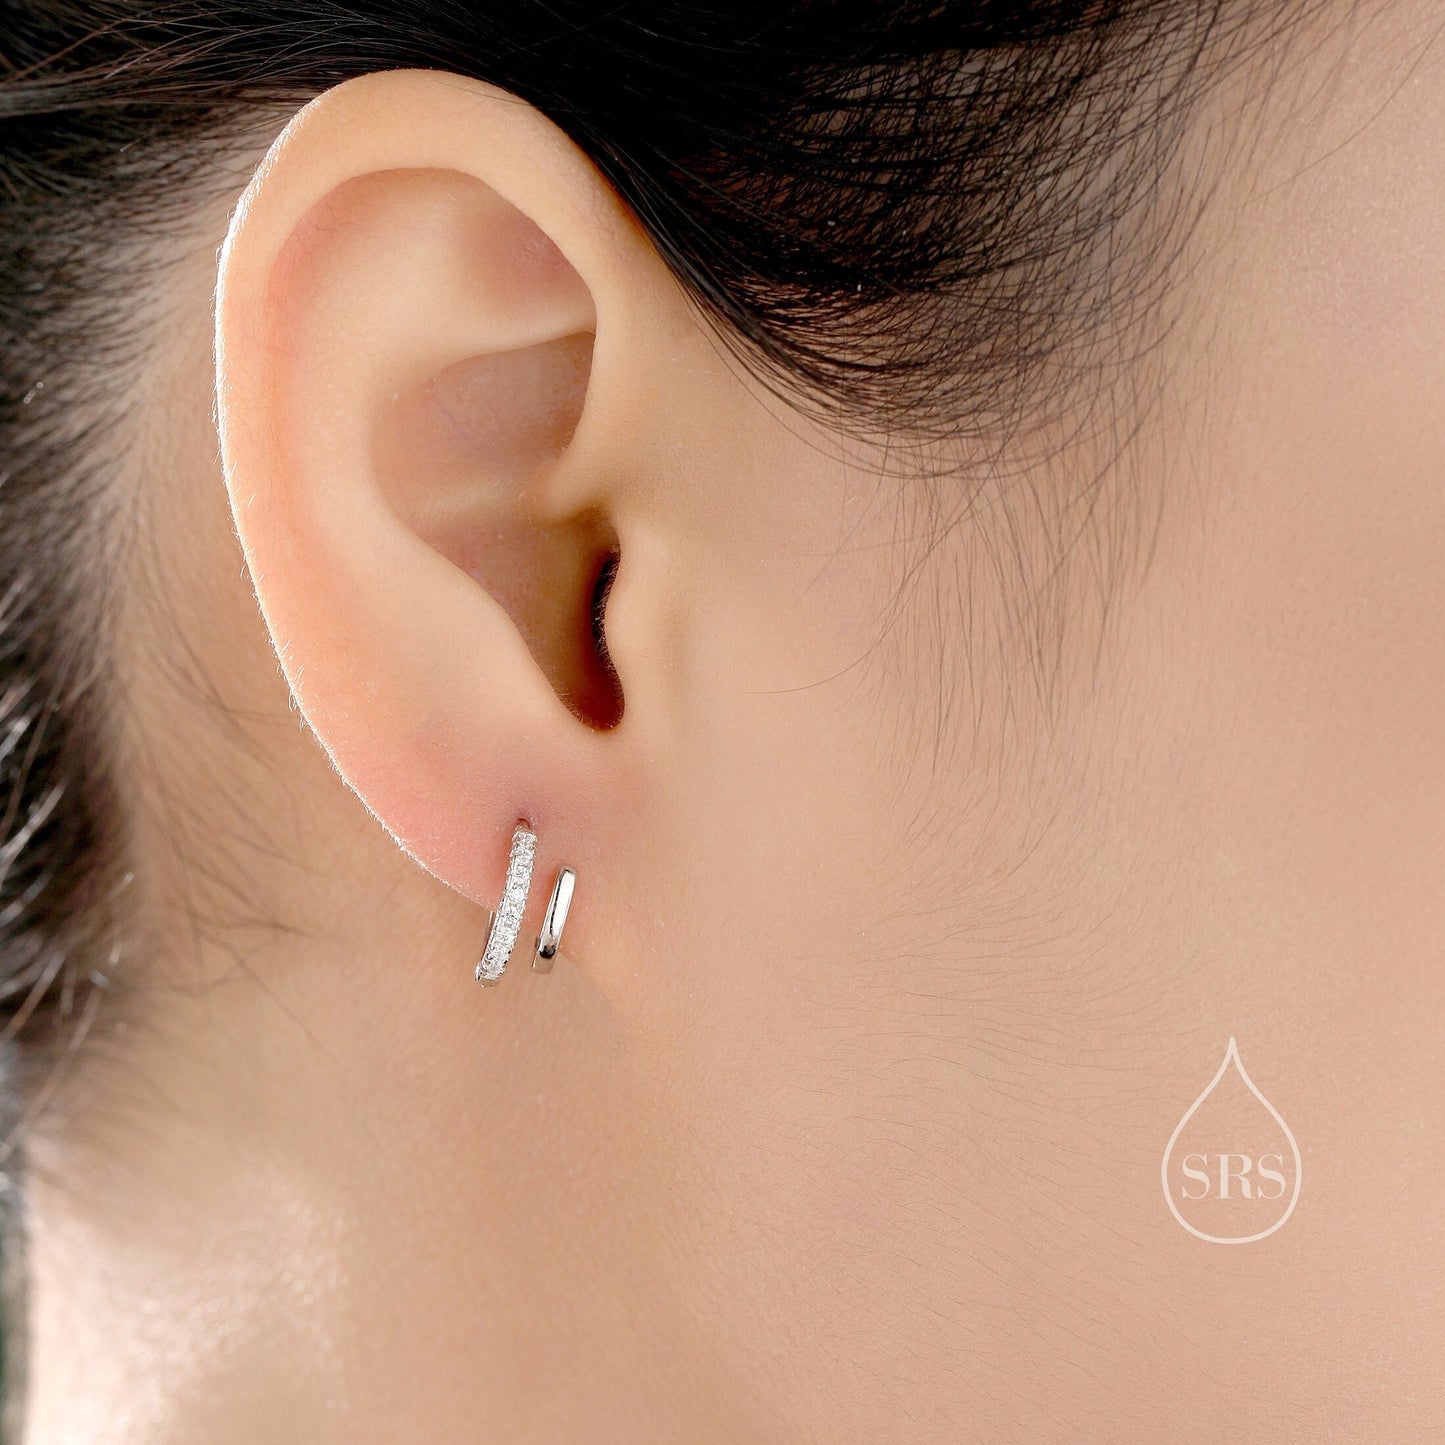 Single Piercing Double Hoop Effect Earrings in Sterling Silver, CZ Pave Hoop Earrings, Silver, Gold, Rose Gold, Dainty and Delicate